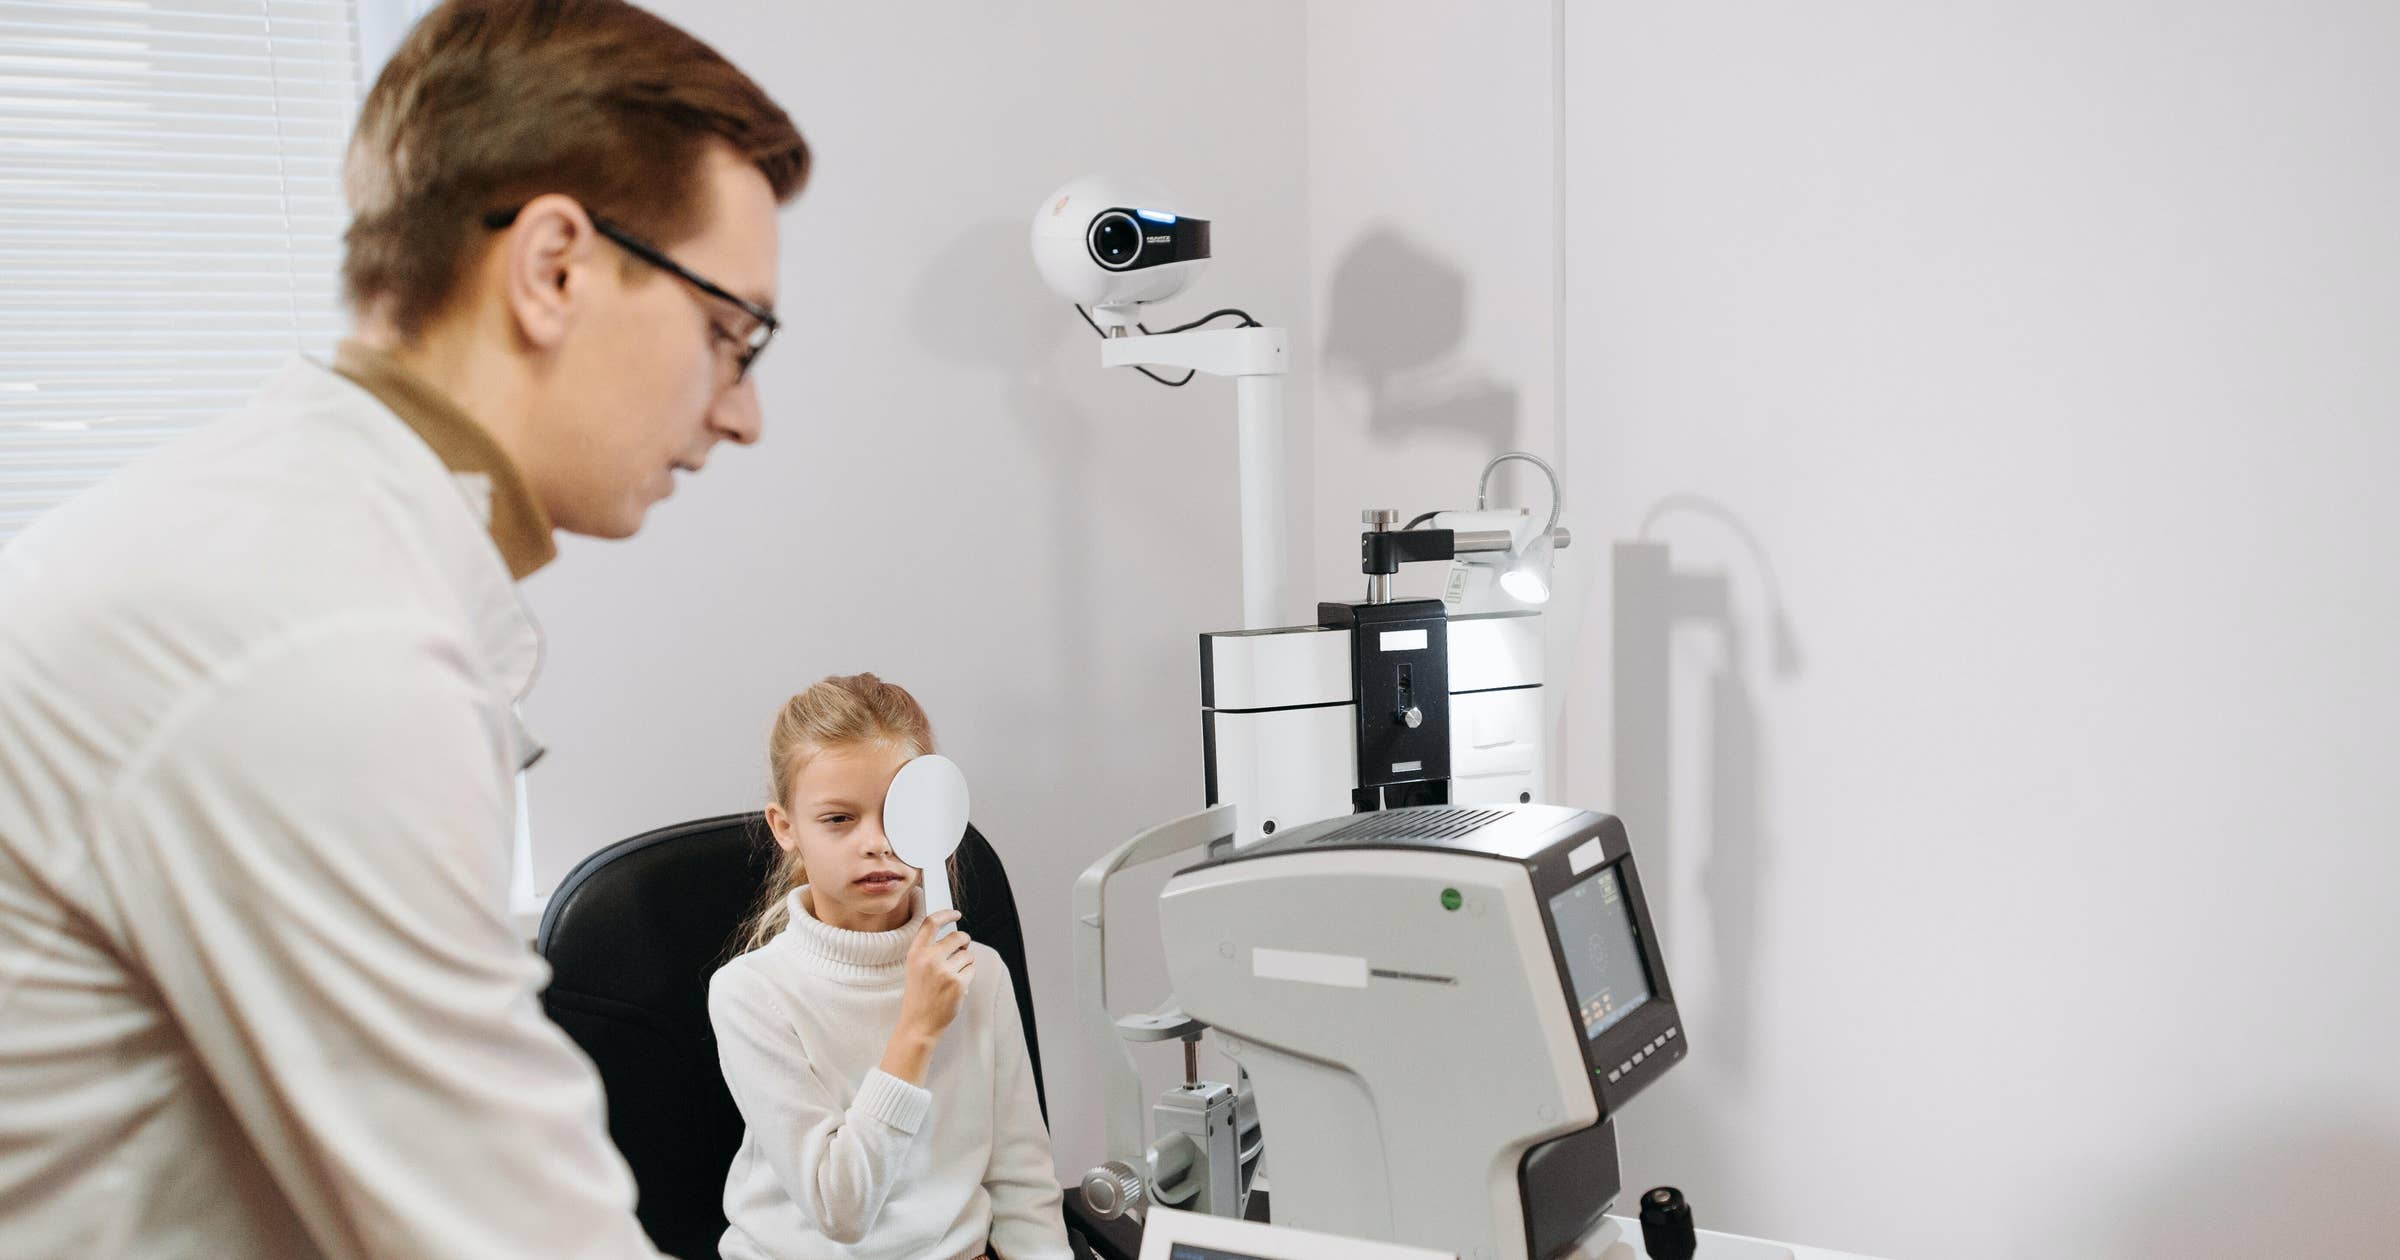 Optometric Assistant Job Description - Betterteam